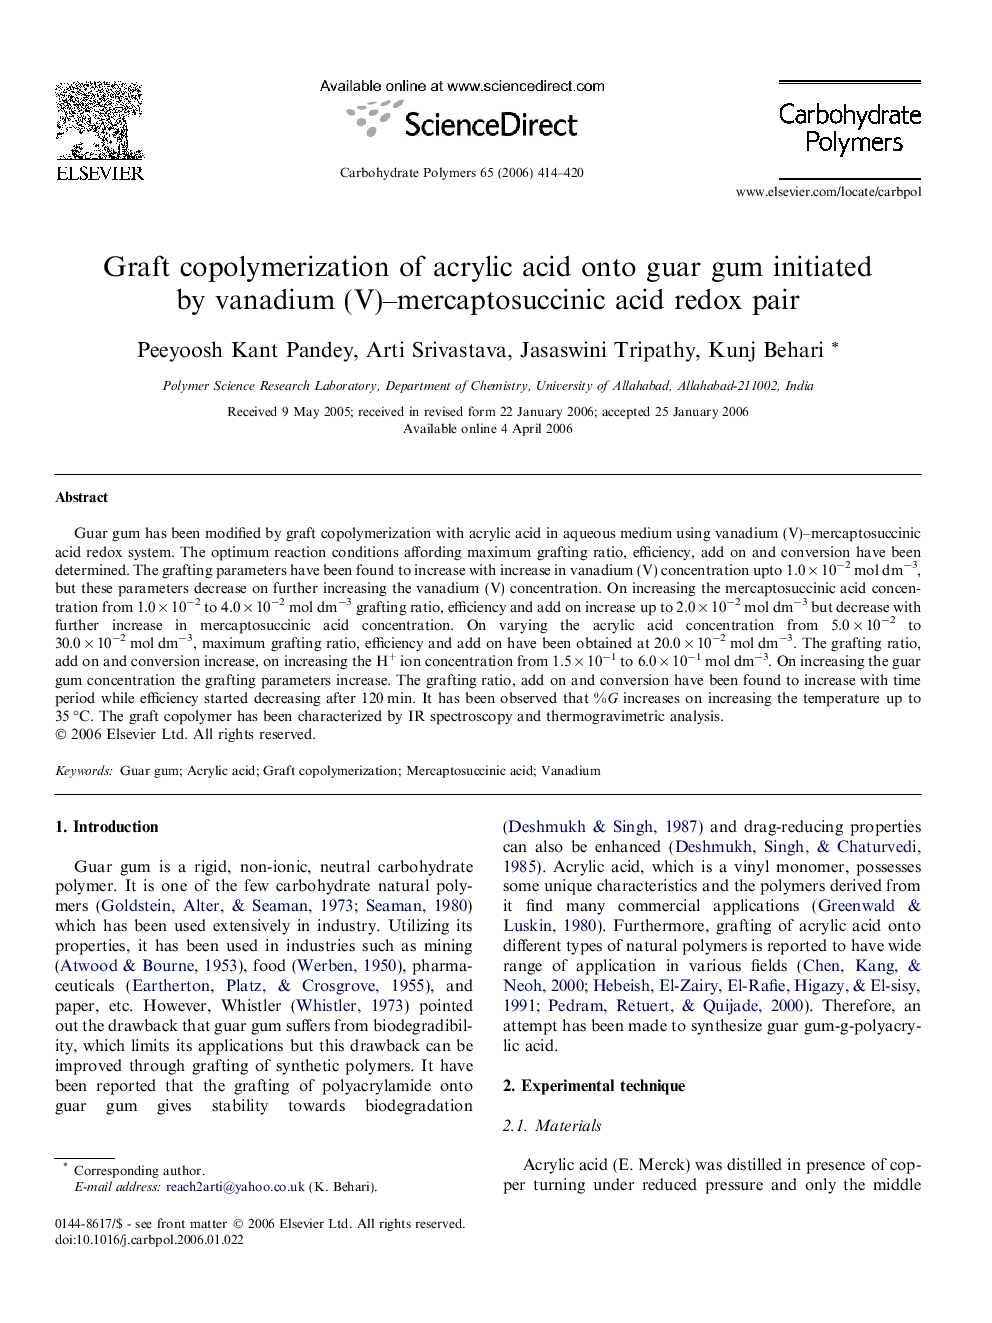 Graft copolymerization of acrylic acid onto guar gum initiated by vanadium (V)–mercaptosuccinic acid redox pair